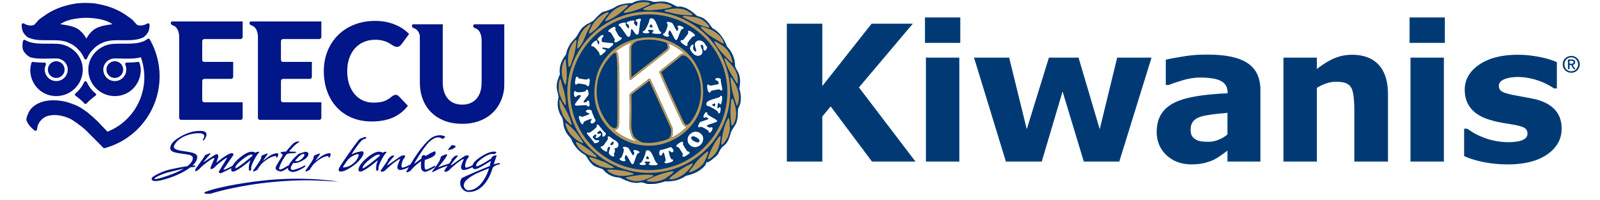 Educational Employees Credit Union Logo and Kiwanis Clubs of Fresno logo